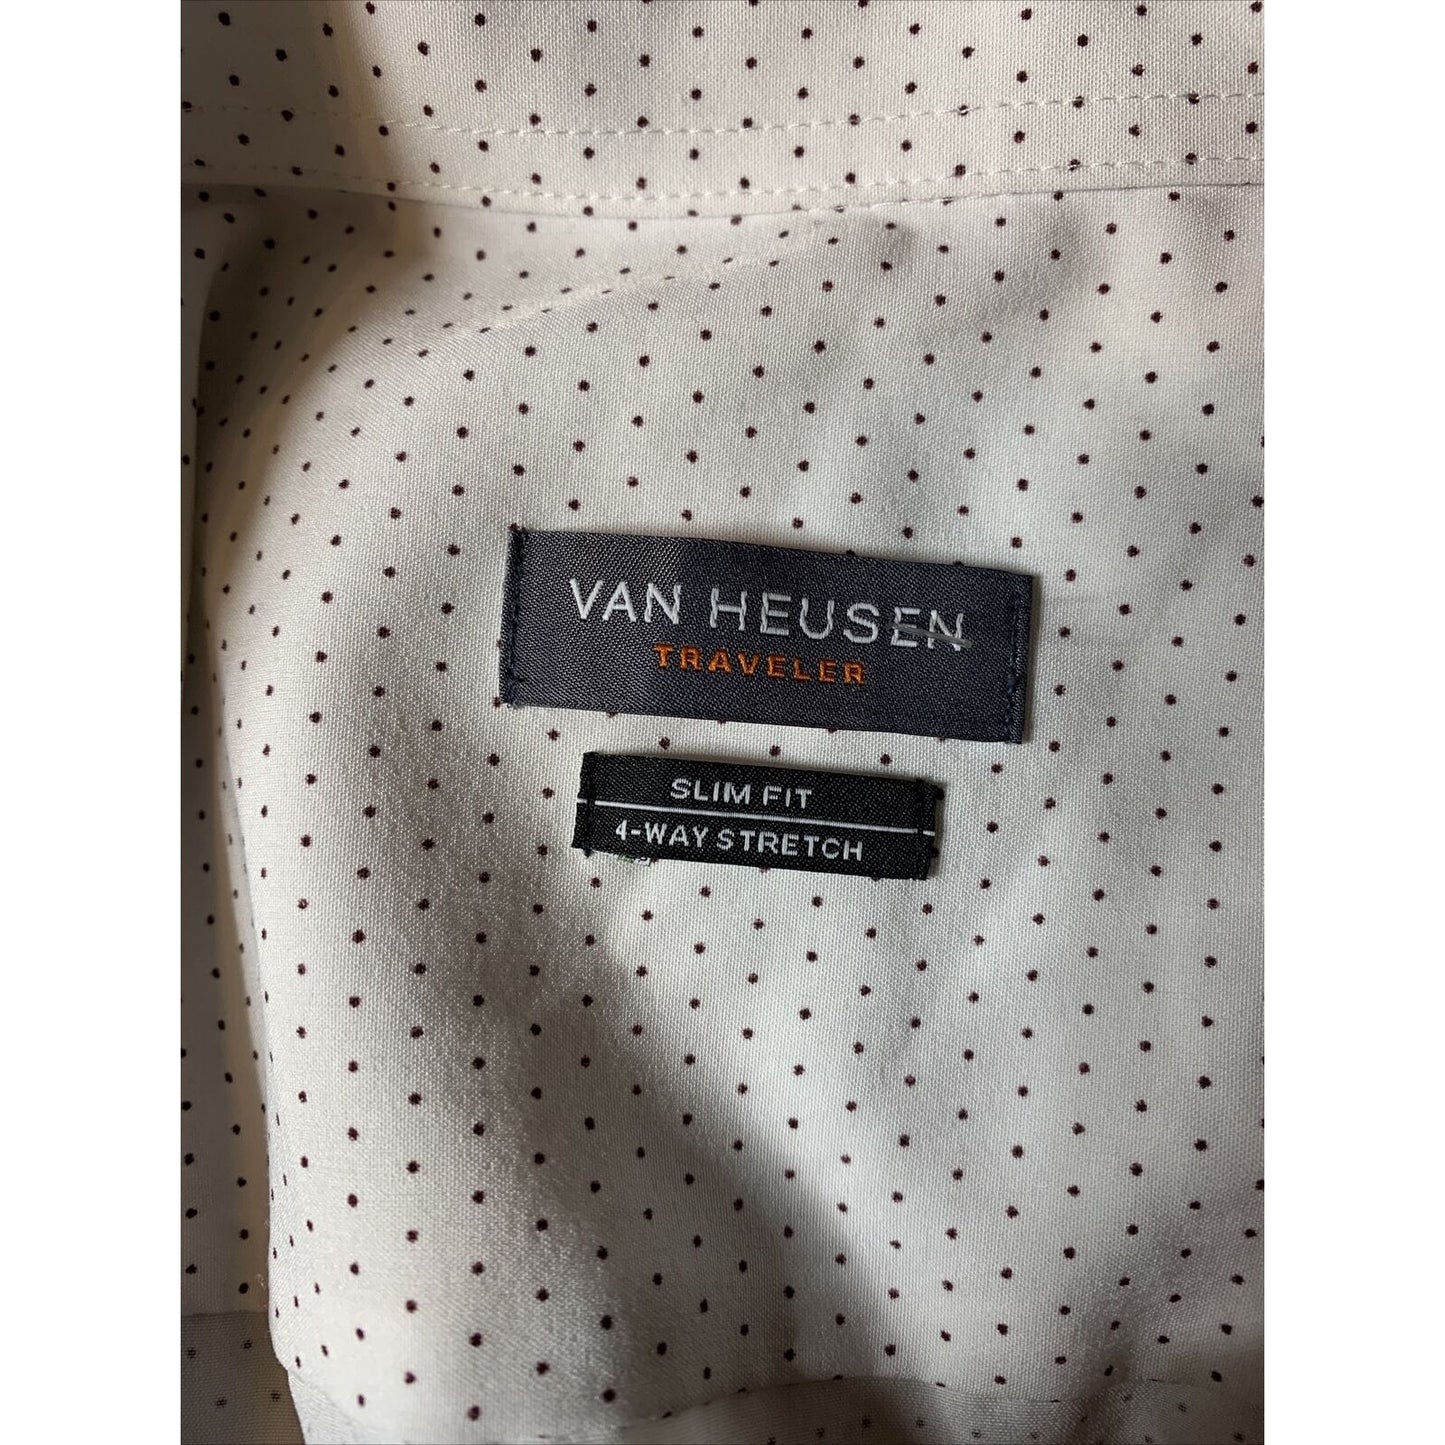 Van Huesen Traveler men’s slim fit SPECKED button down shirt 14-14.5 X 32/33